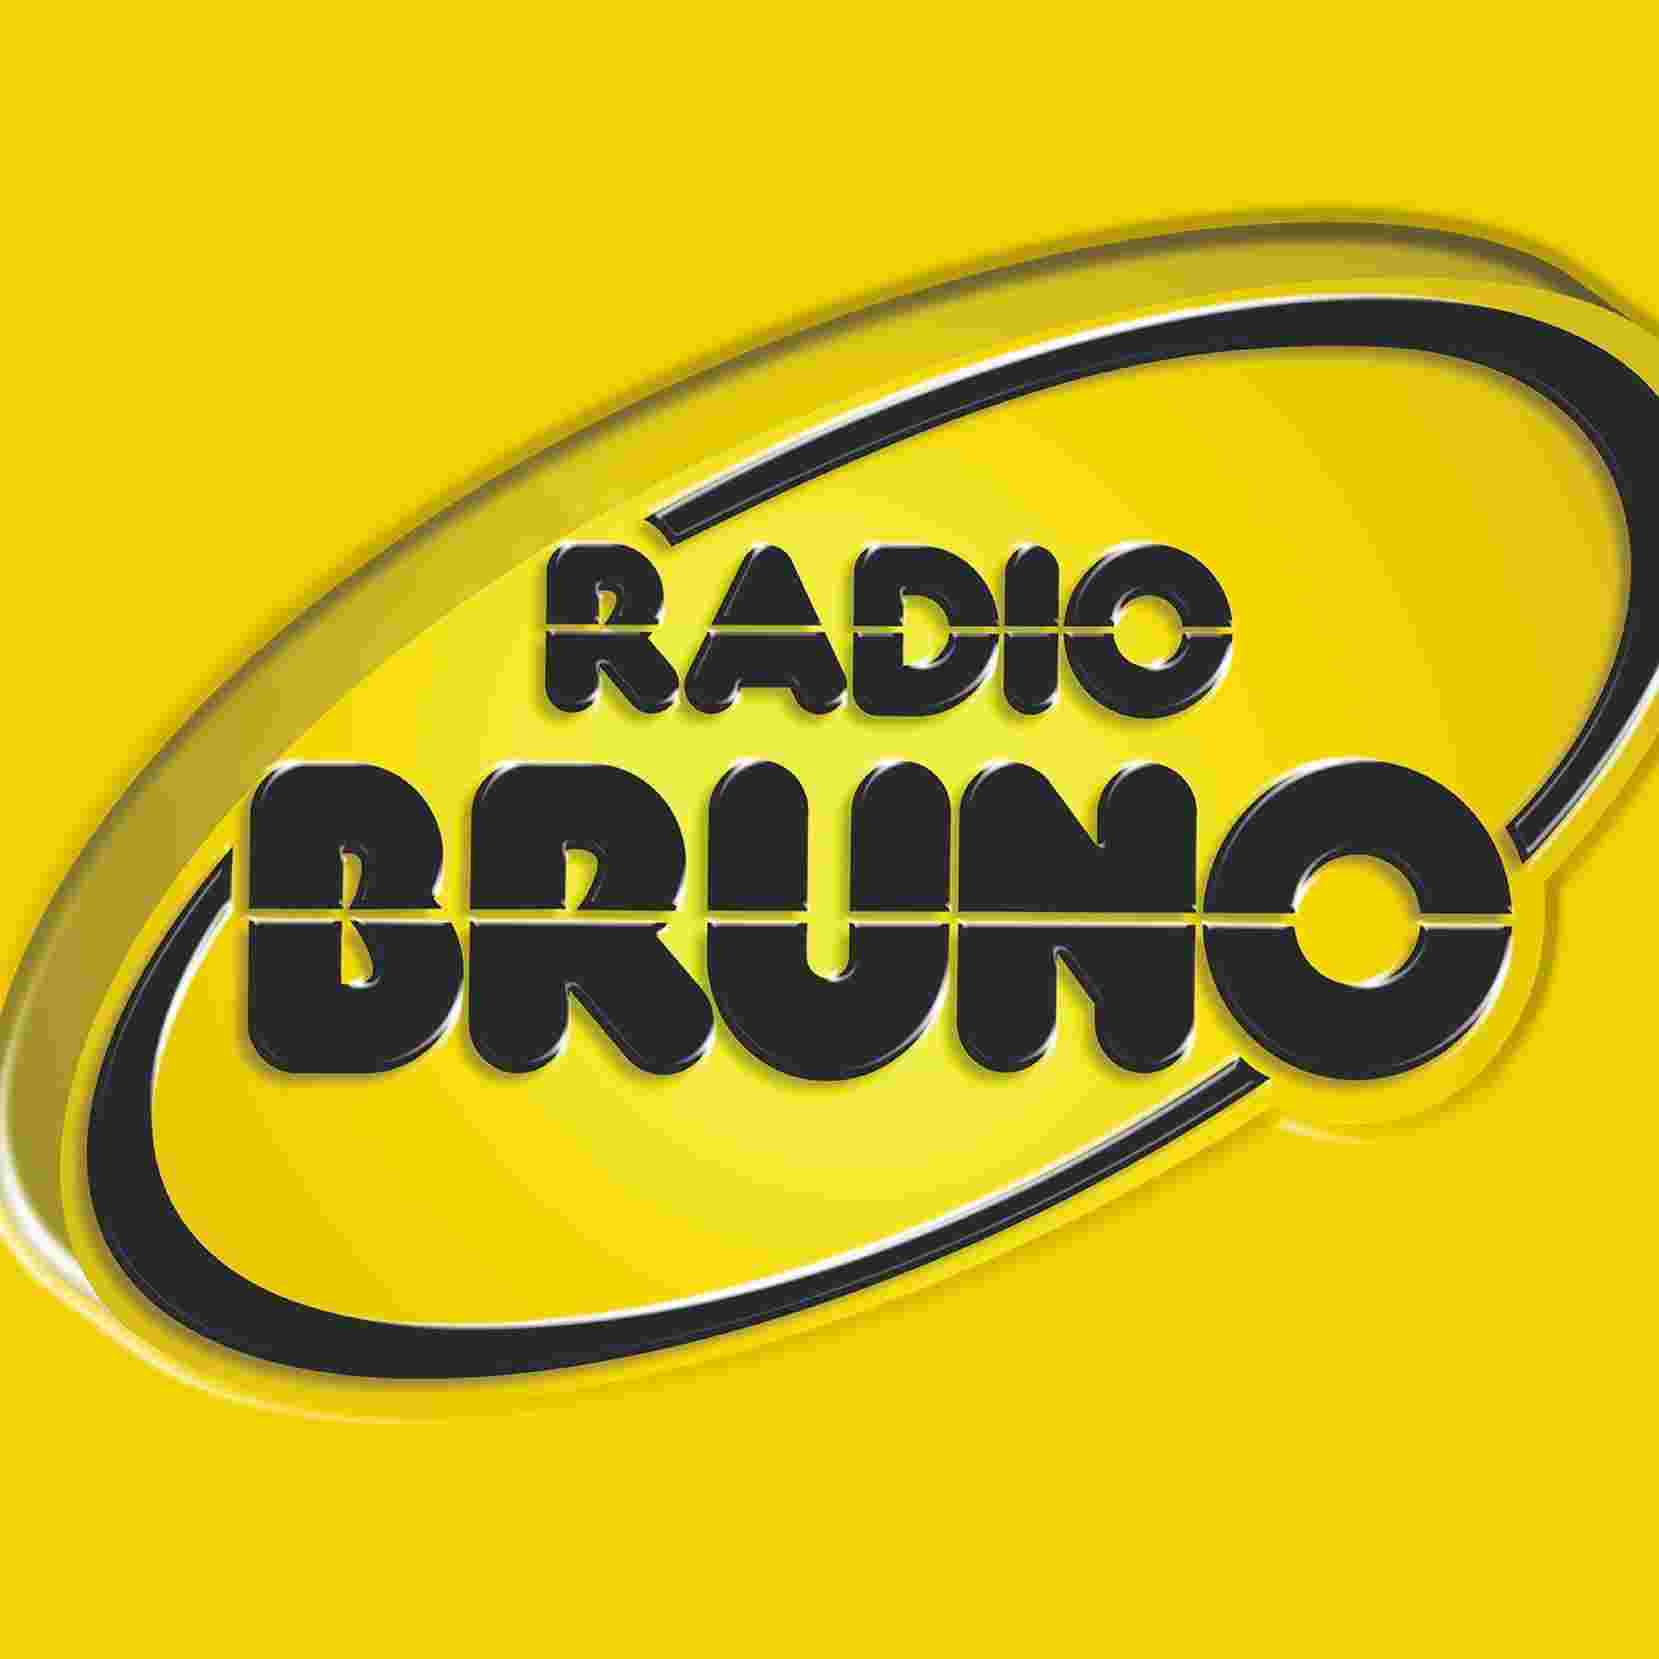 Radio Bruno (Pesaro)